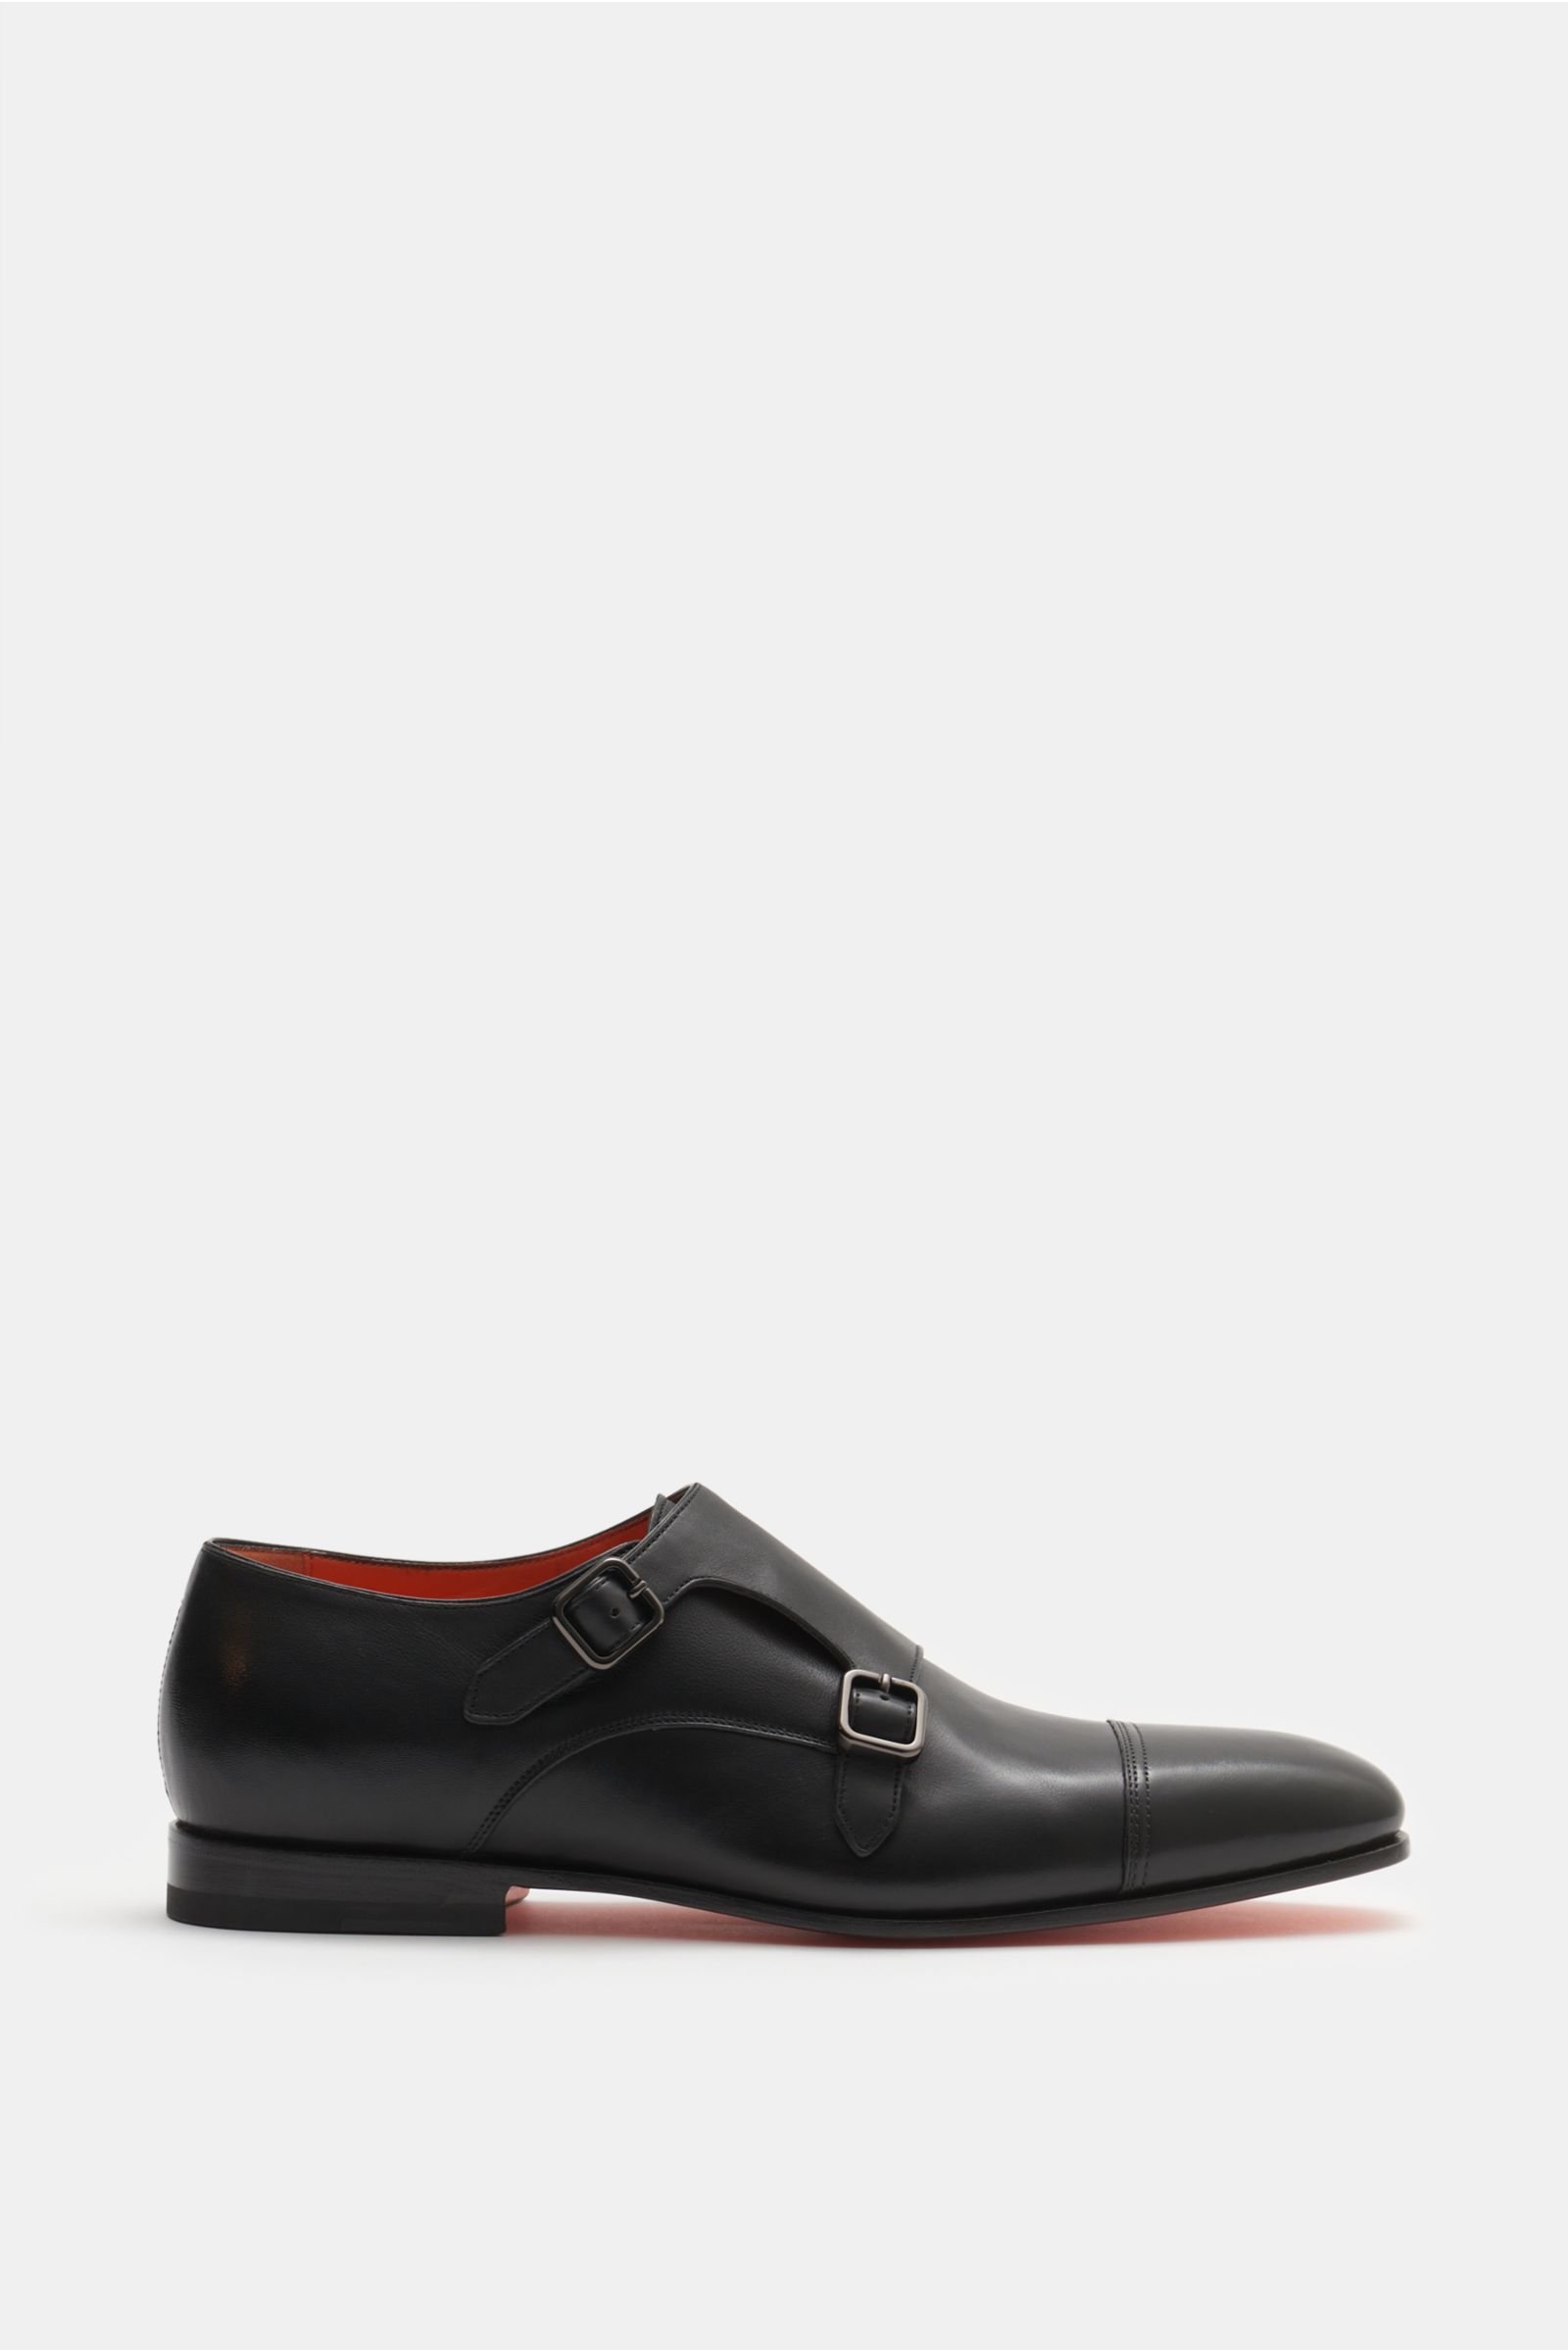 SANTONI double monk shoes black | BRAUN Hamburg